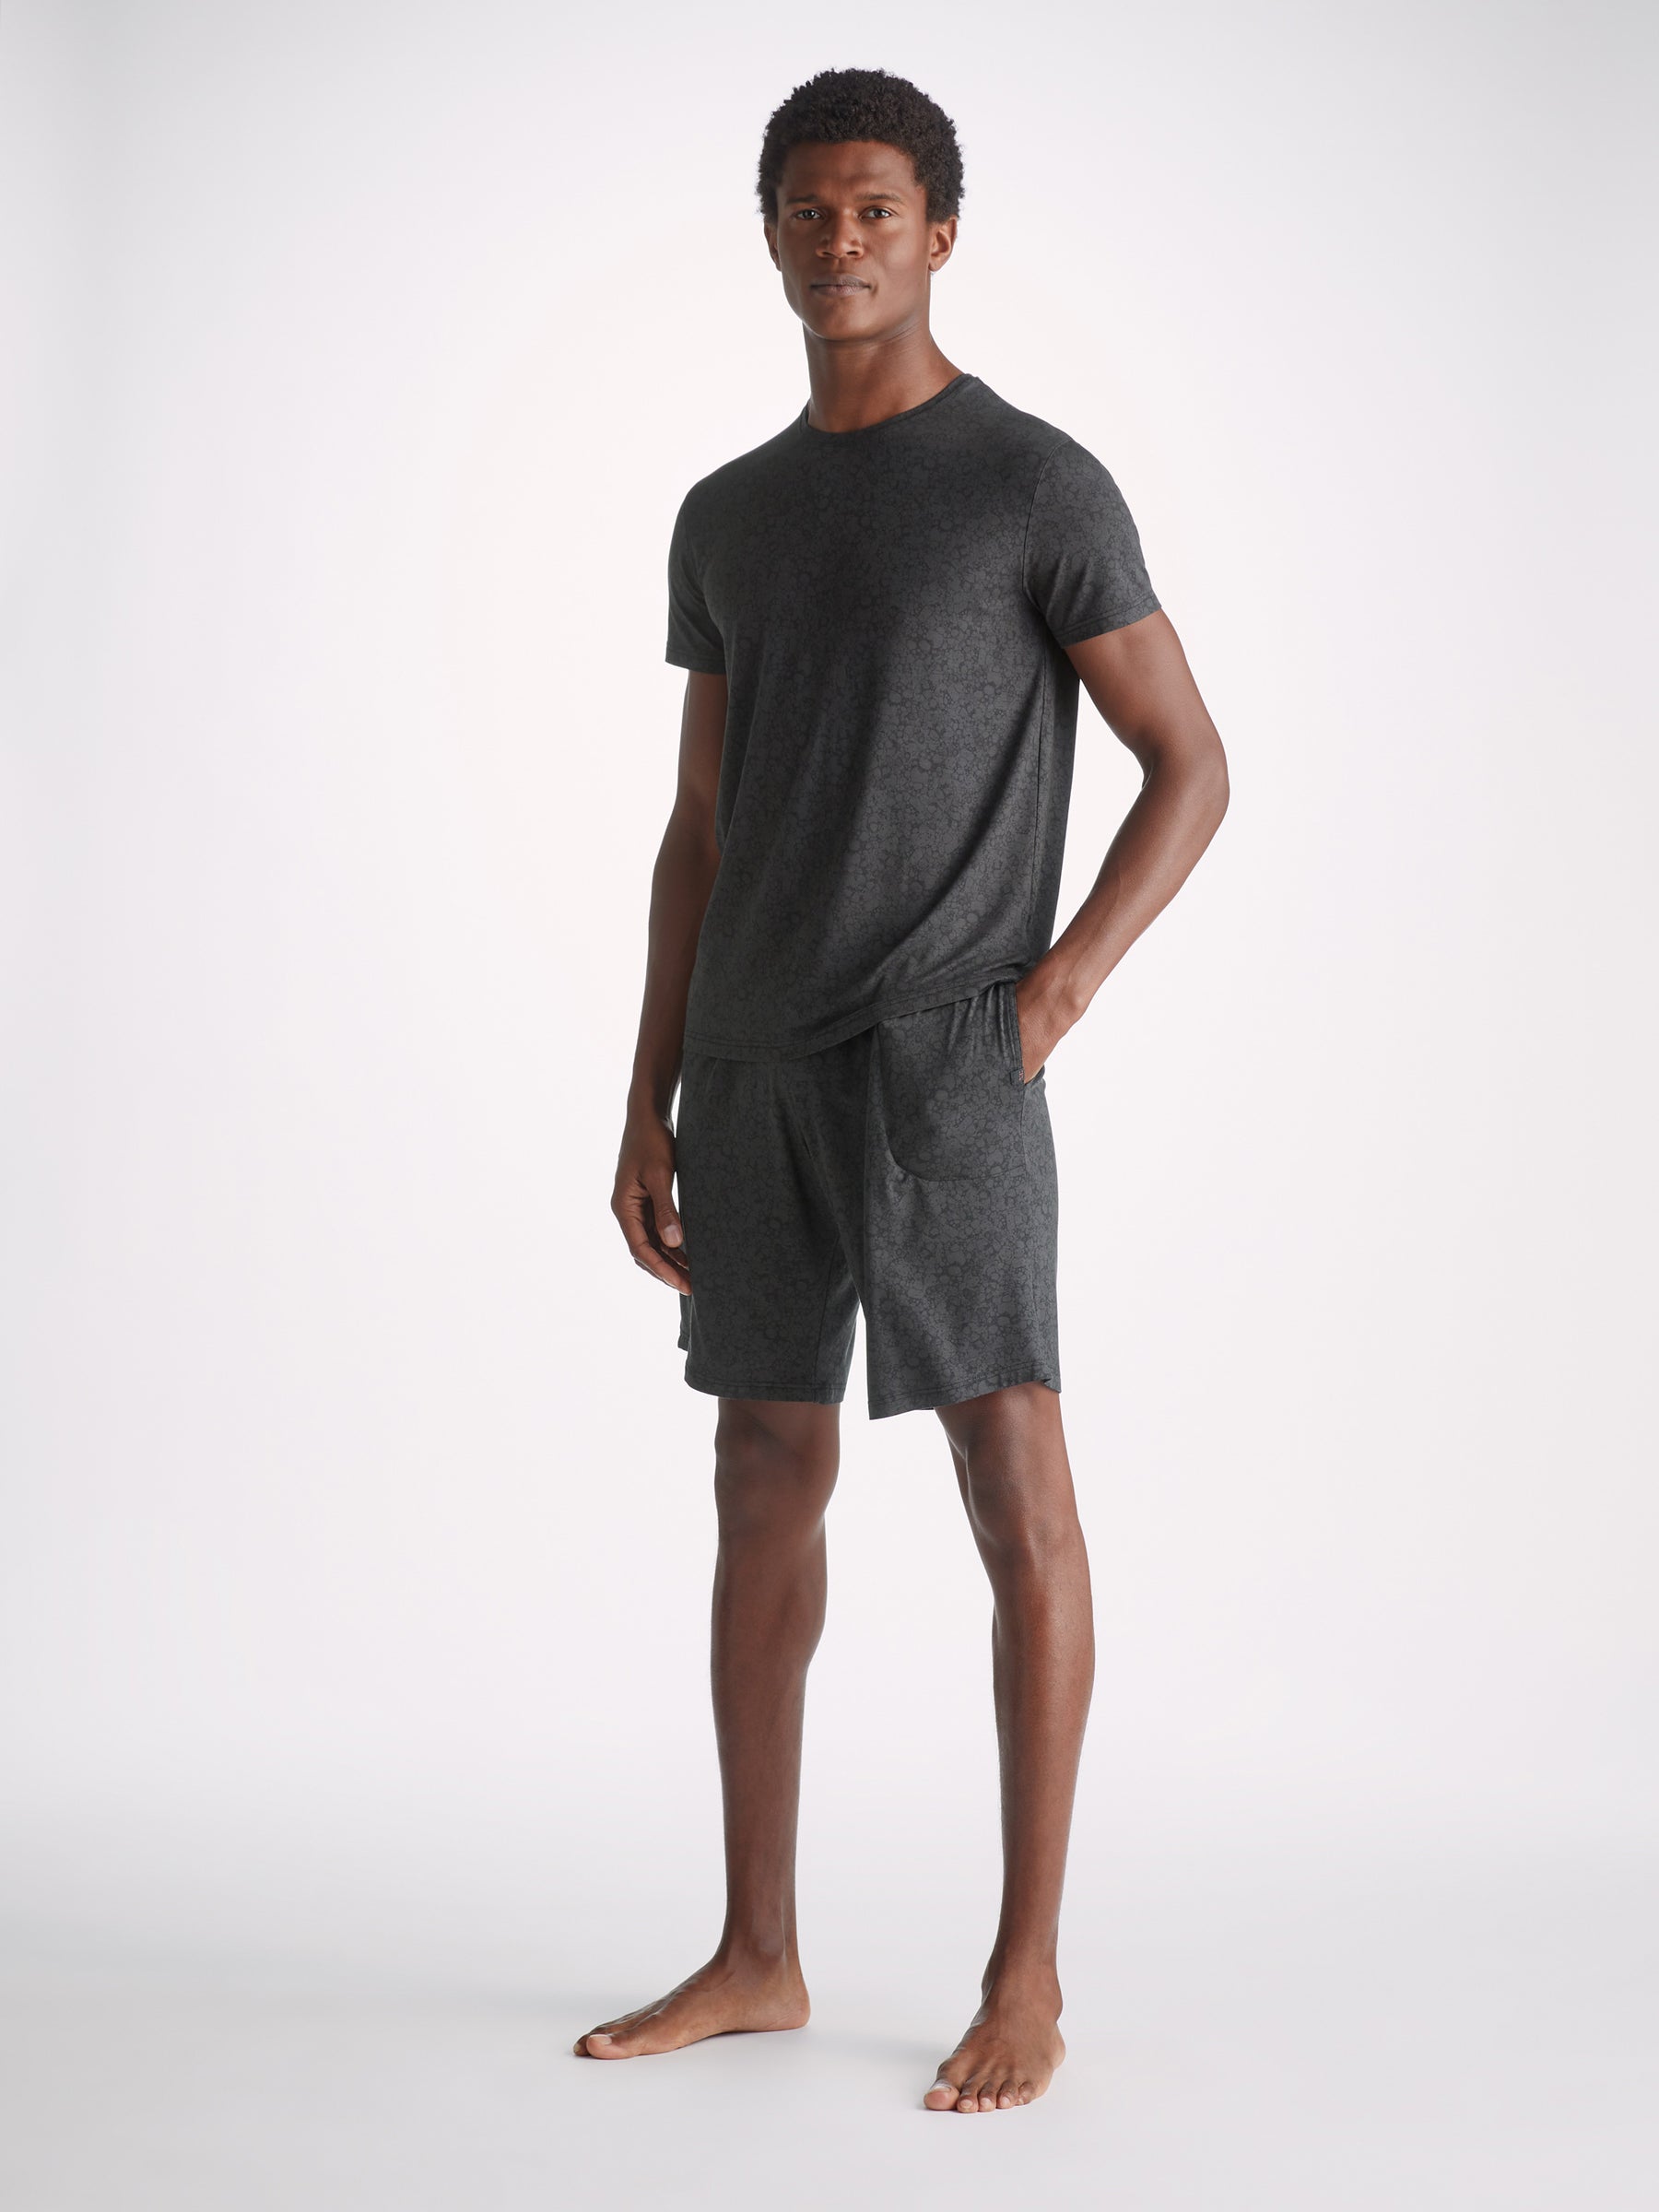 Men's T-Shirt London 10 Micro Modal Black